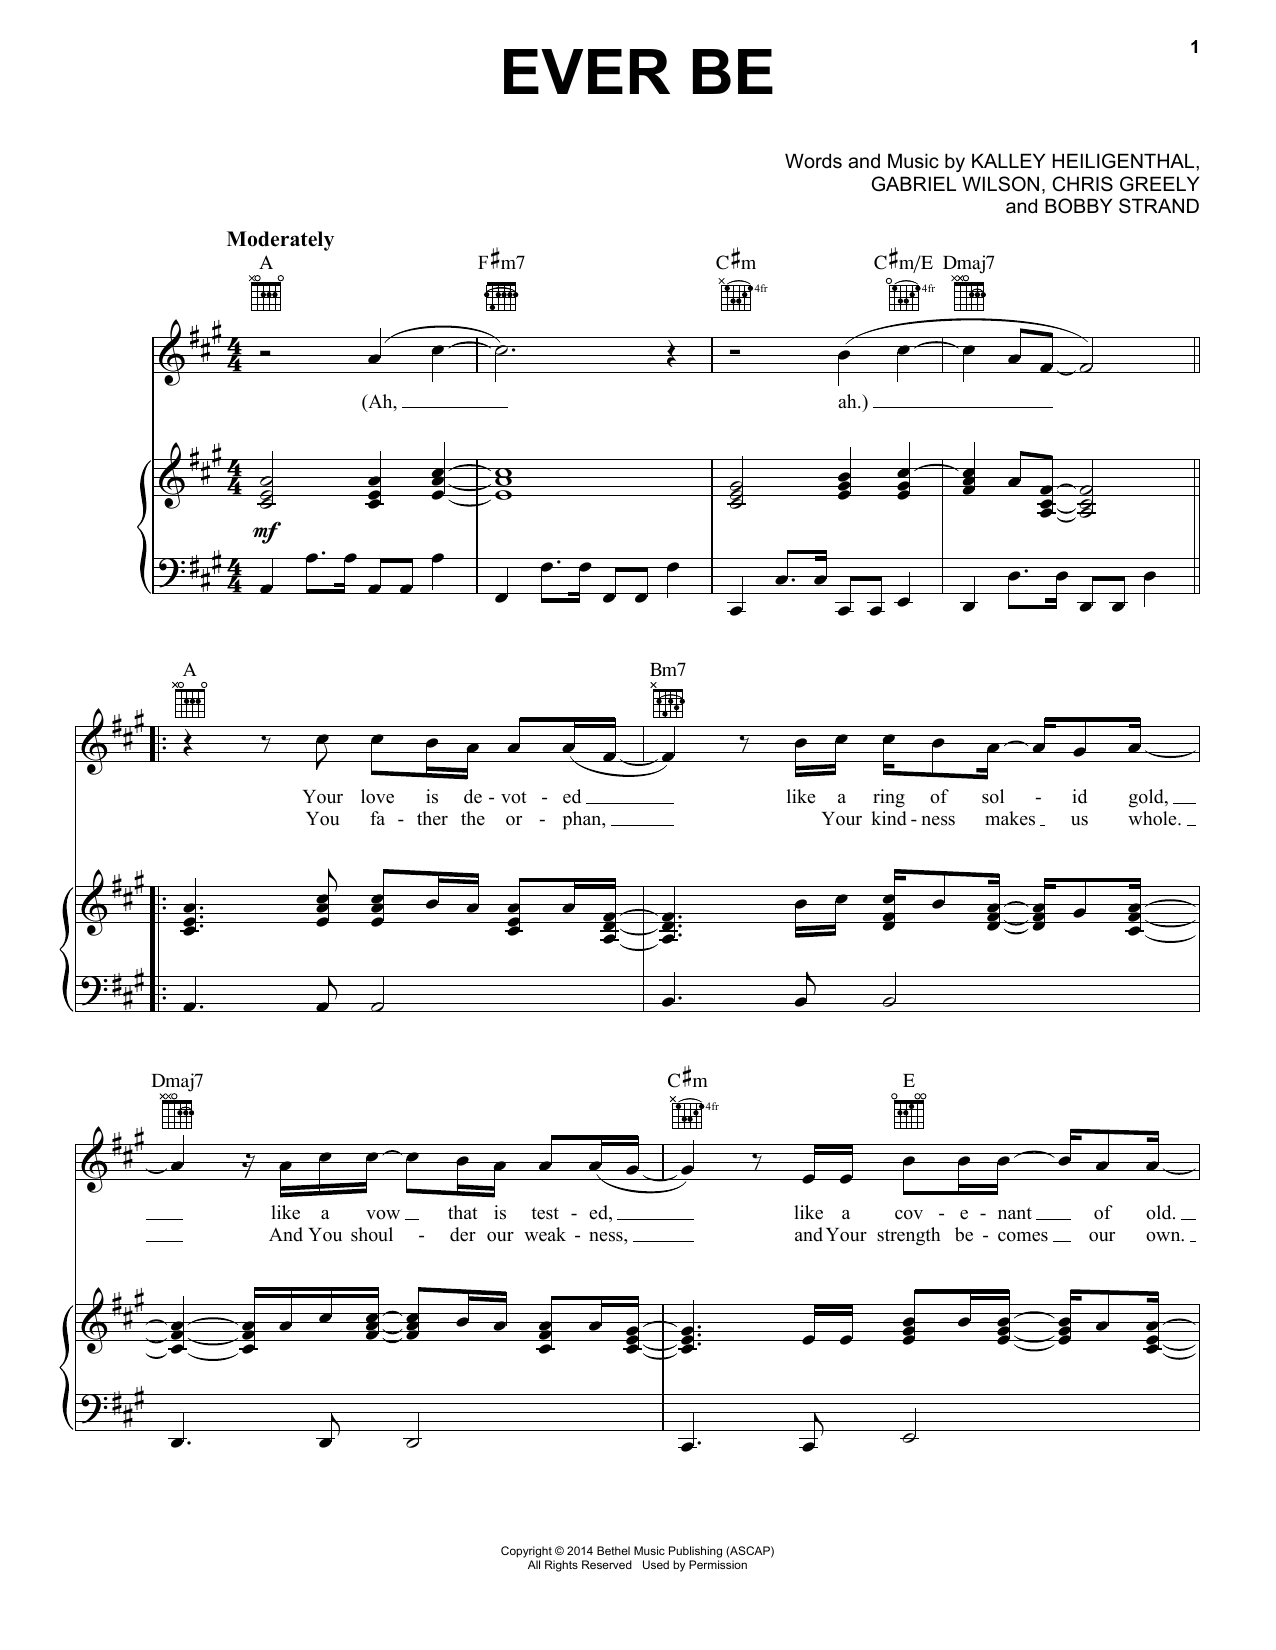 Bethel Music Ever Be Sheet Music Notes & Chords for Ukulele - Download or Print PDF